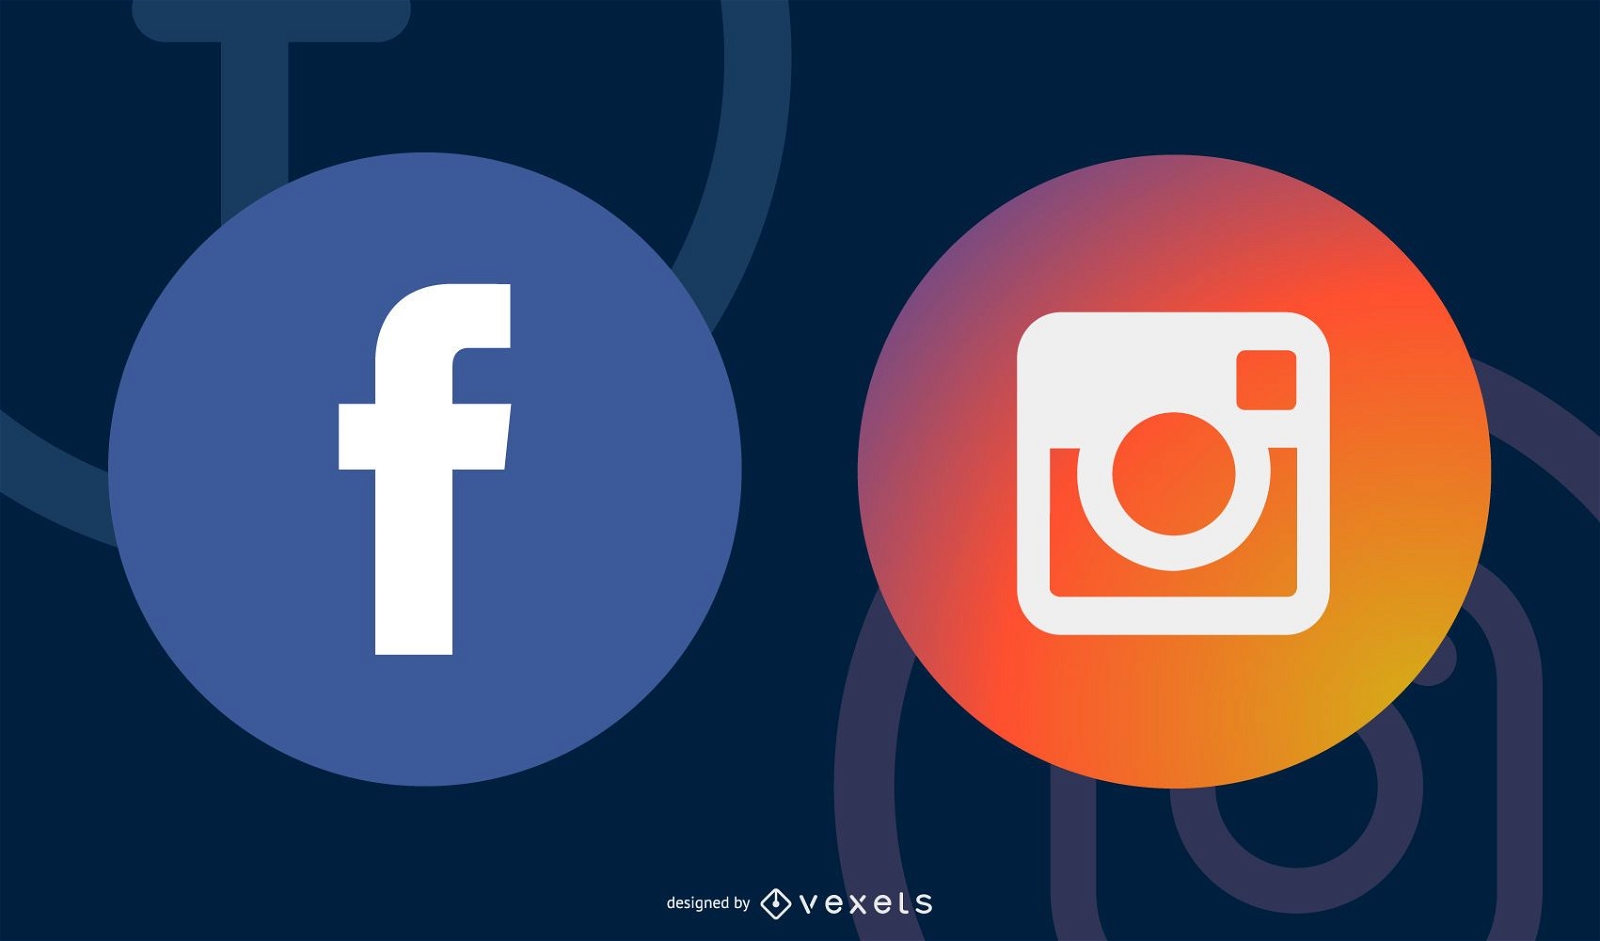 Paquete de iconos de redes sociales redondeadas coloridas